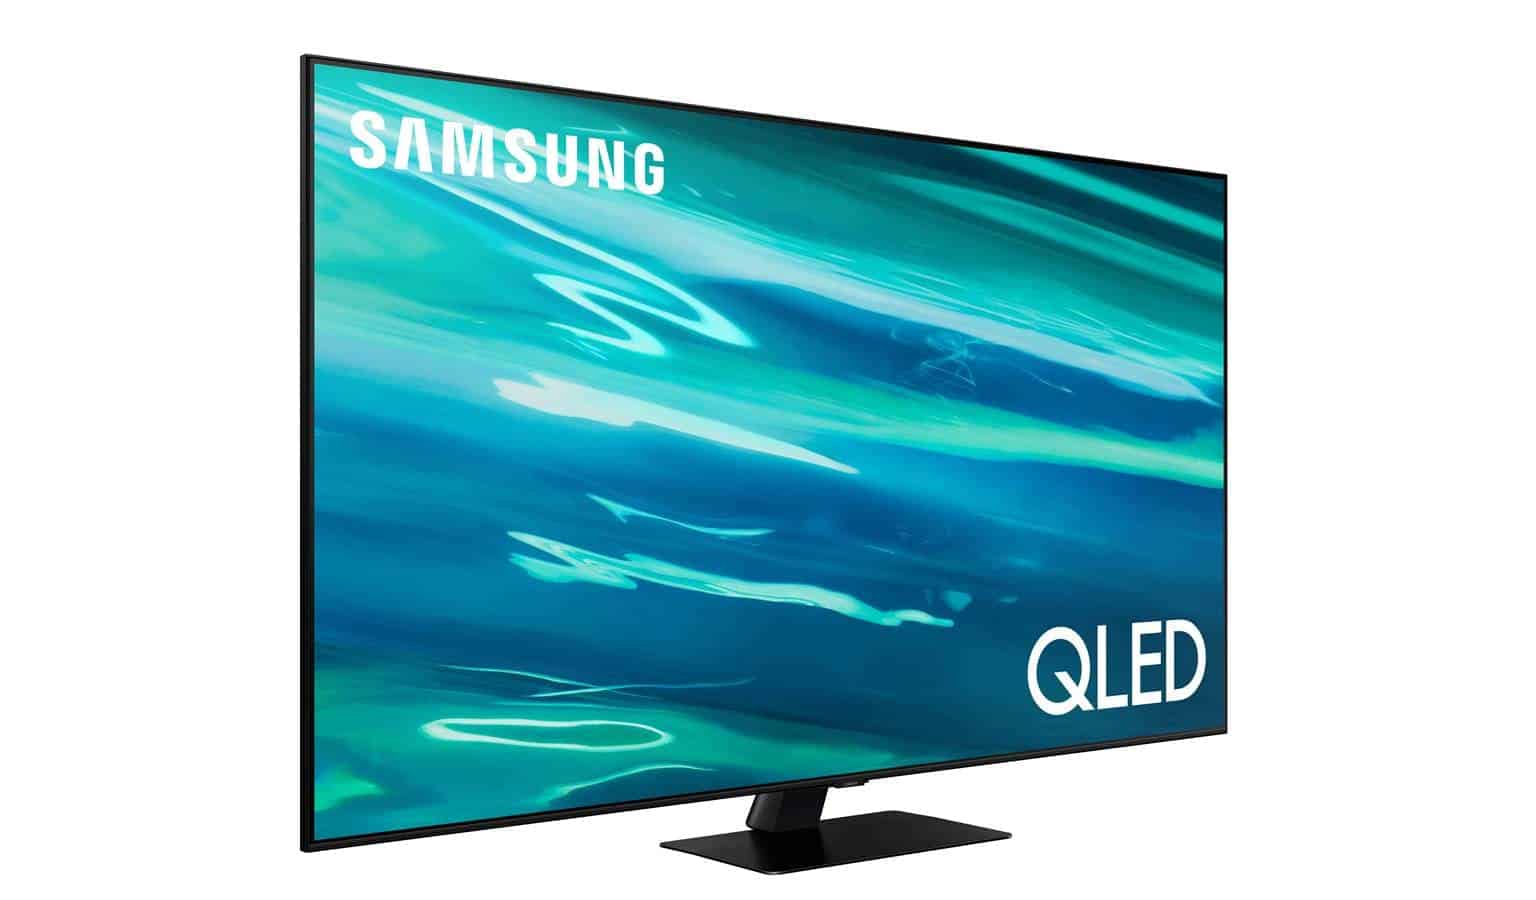 Samsung Q80A 4K QLED TV